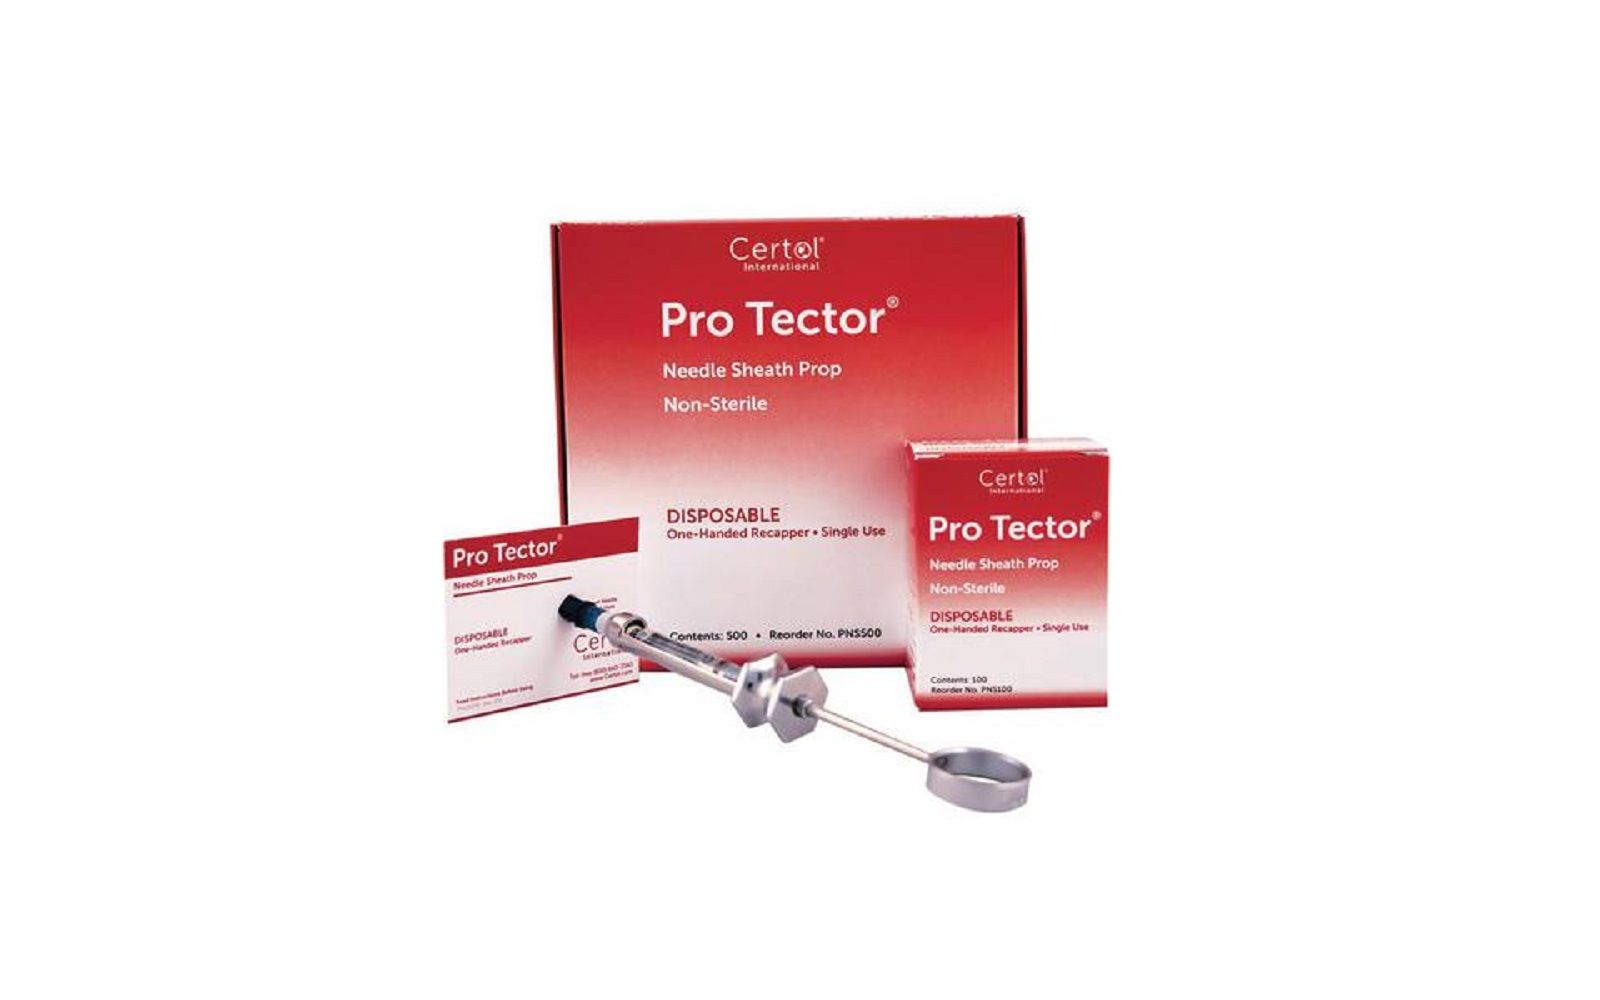 Protector® needle sheath prop, disposable - certol international llc